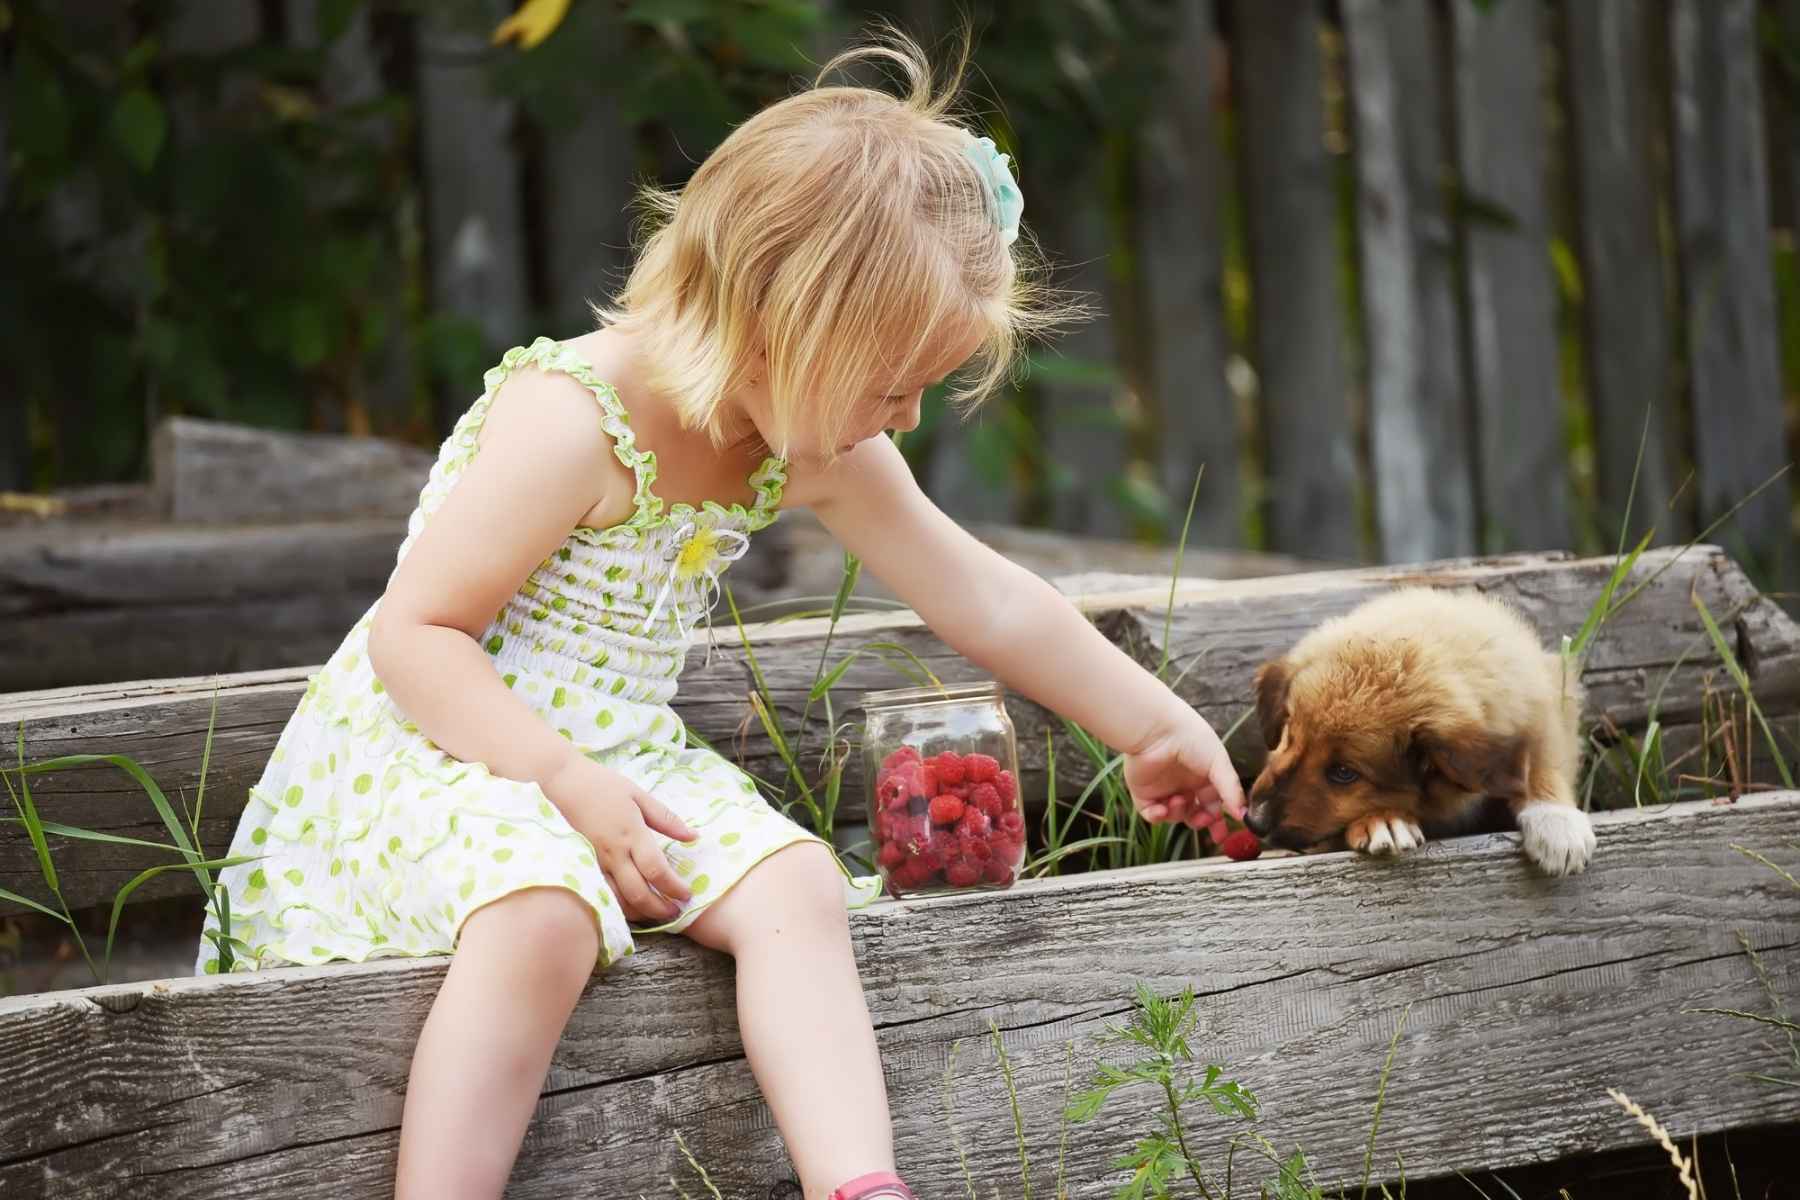 Girl feeding a puppy with raspberries